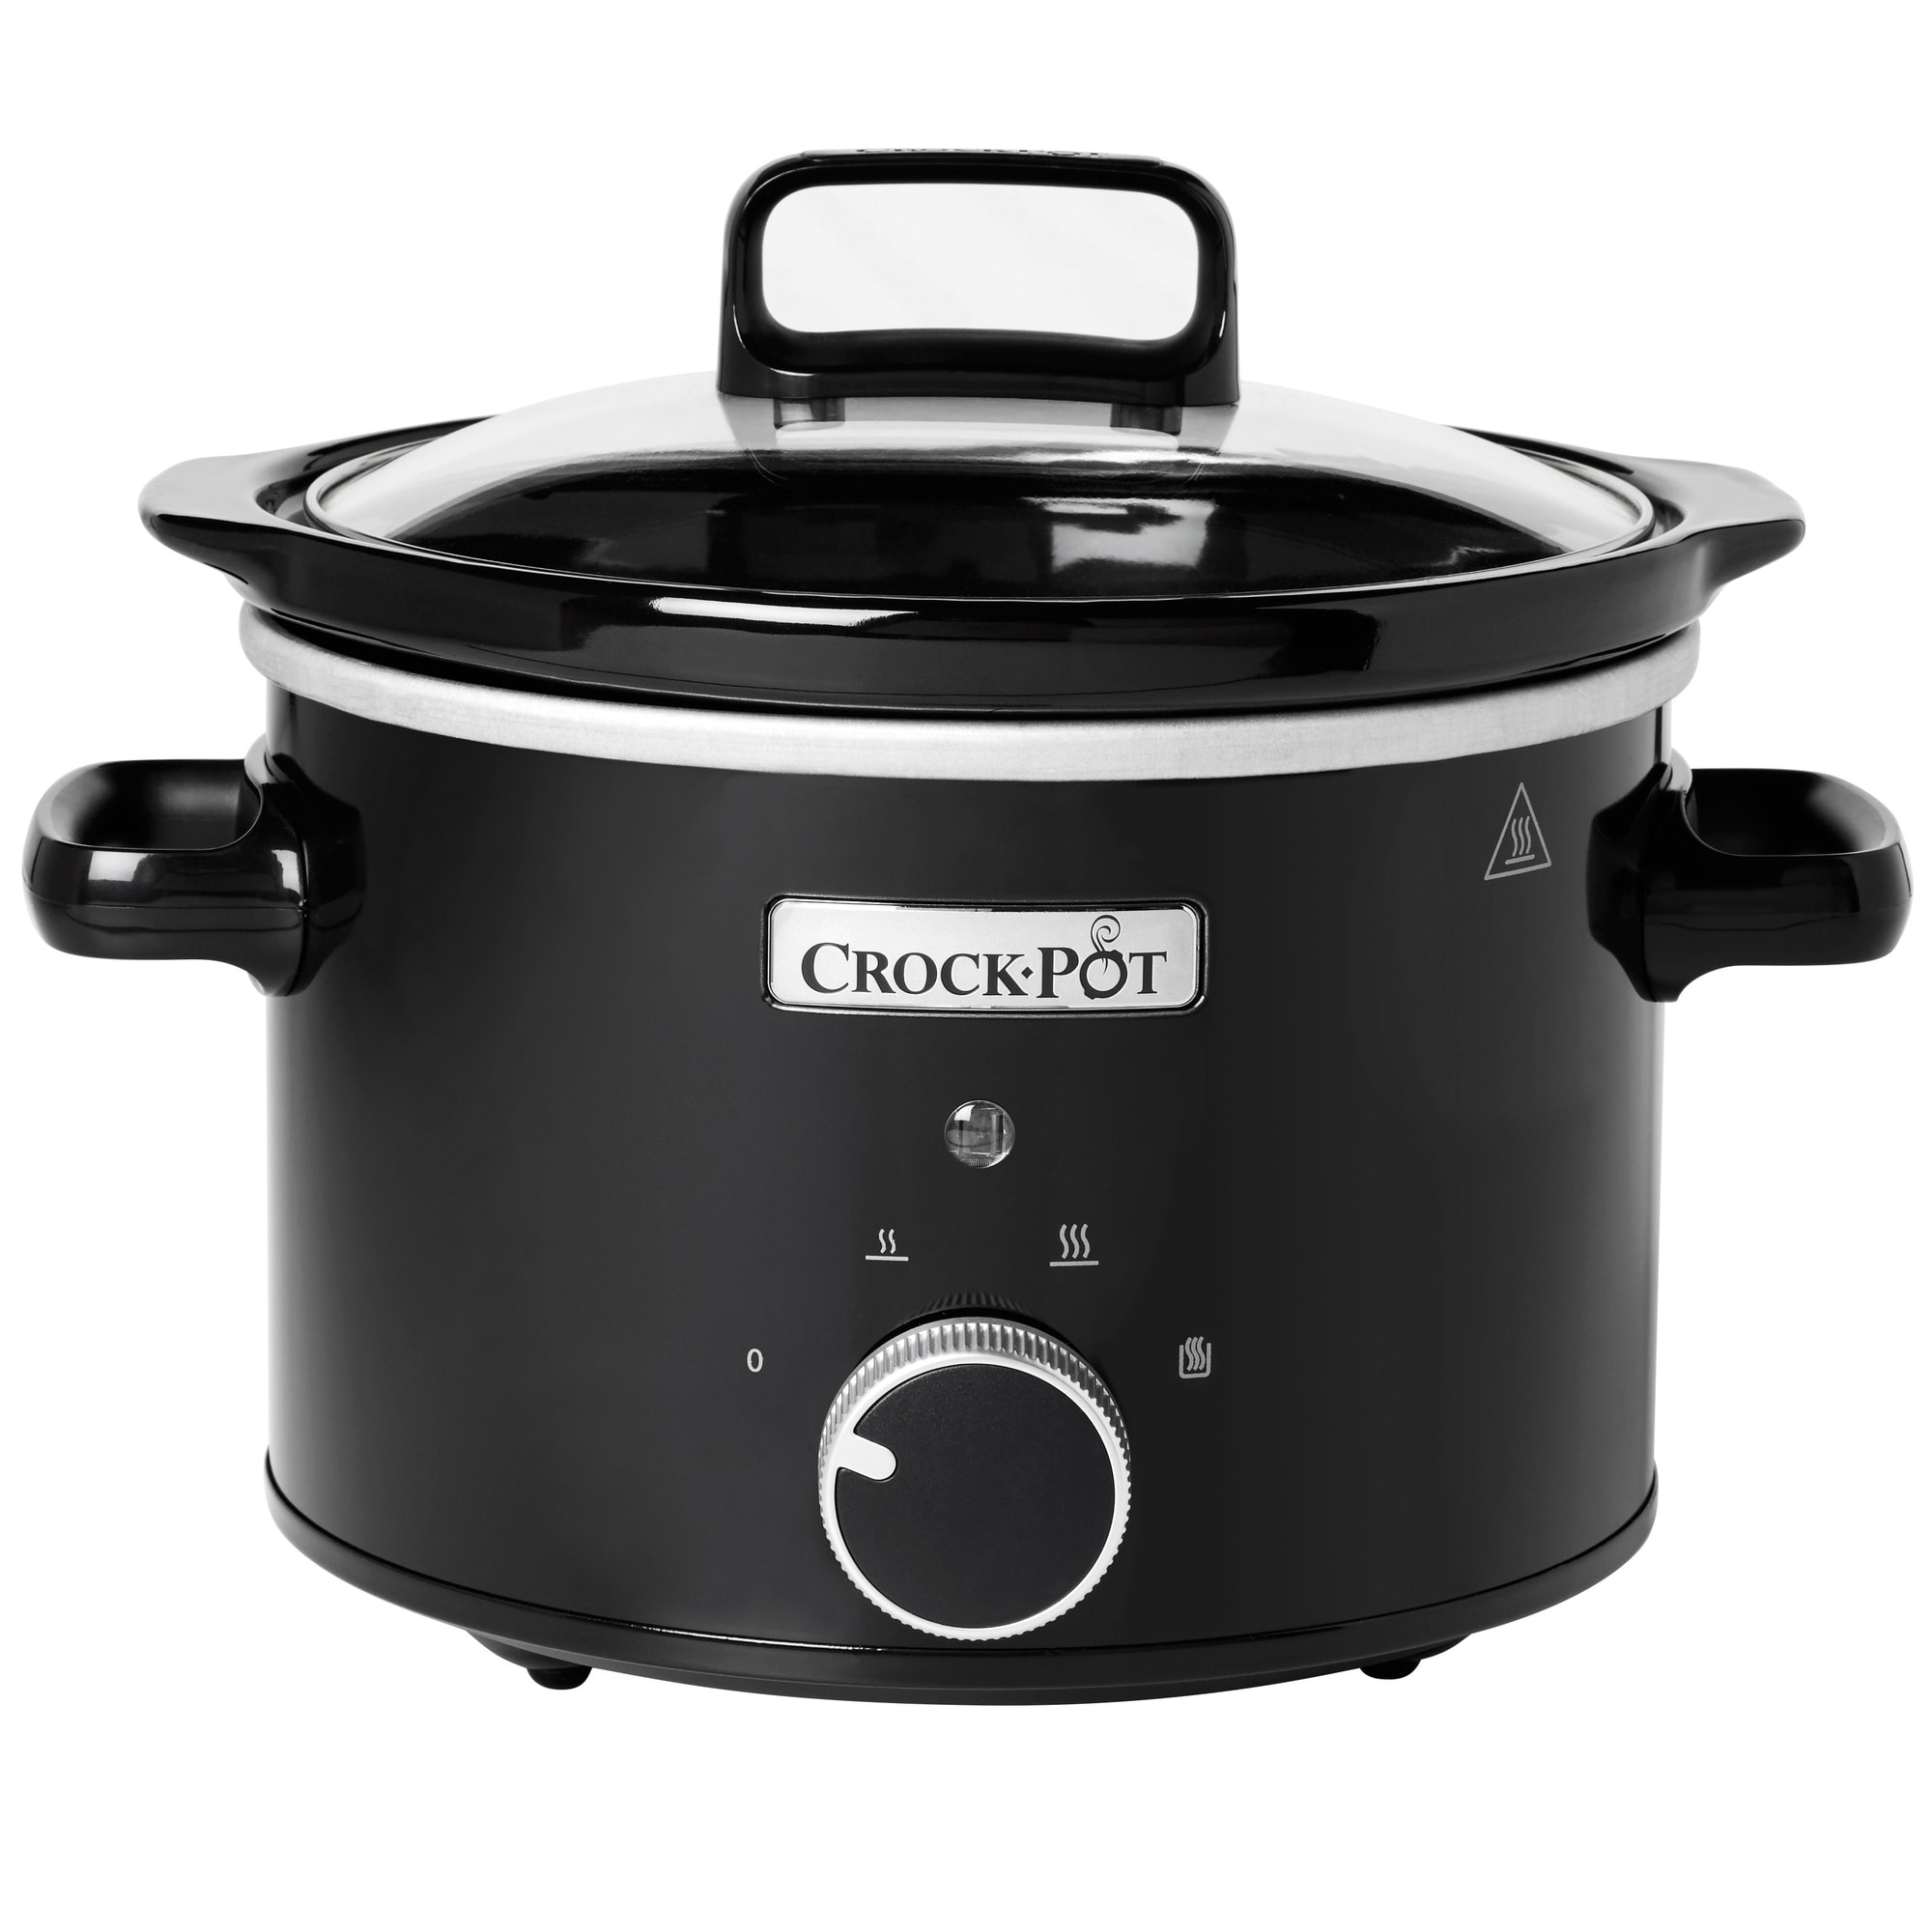 Crock-Pot manual slow cooker 201022 | Elgiganten